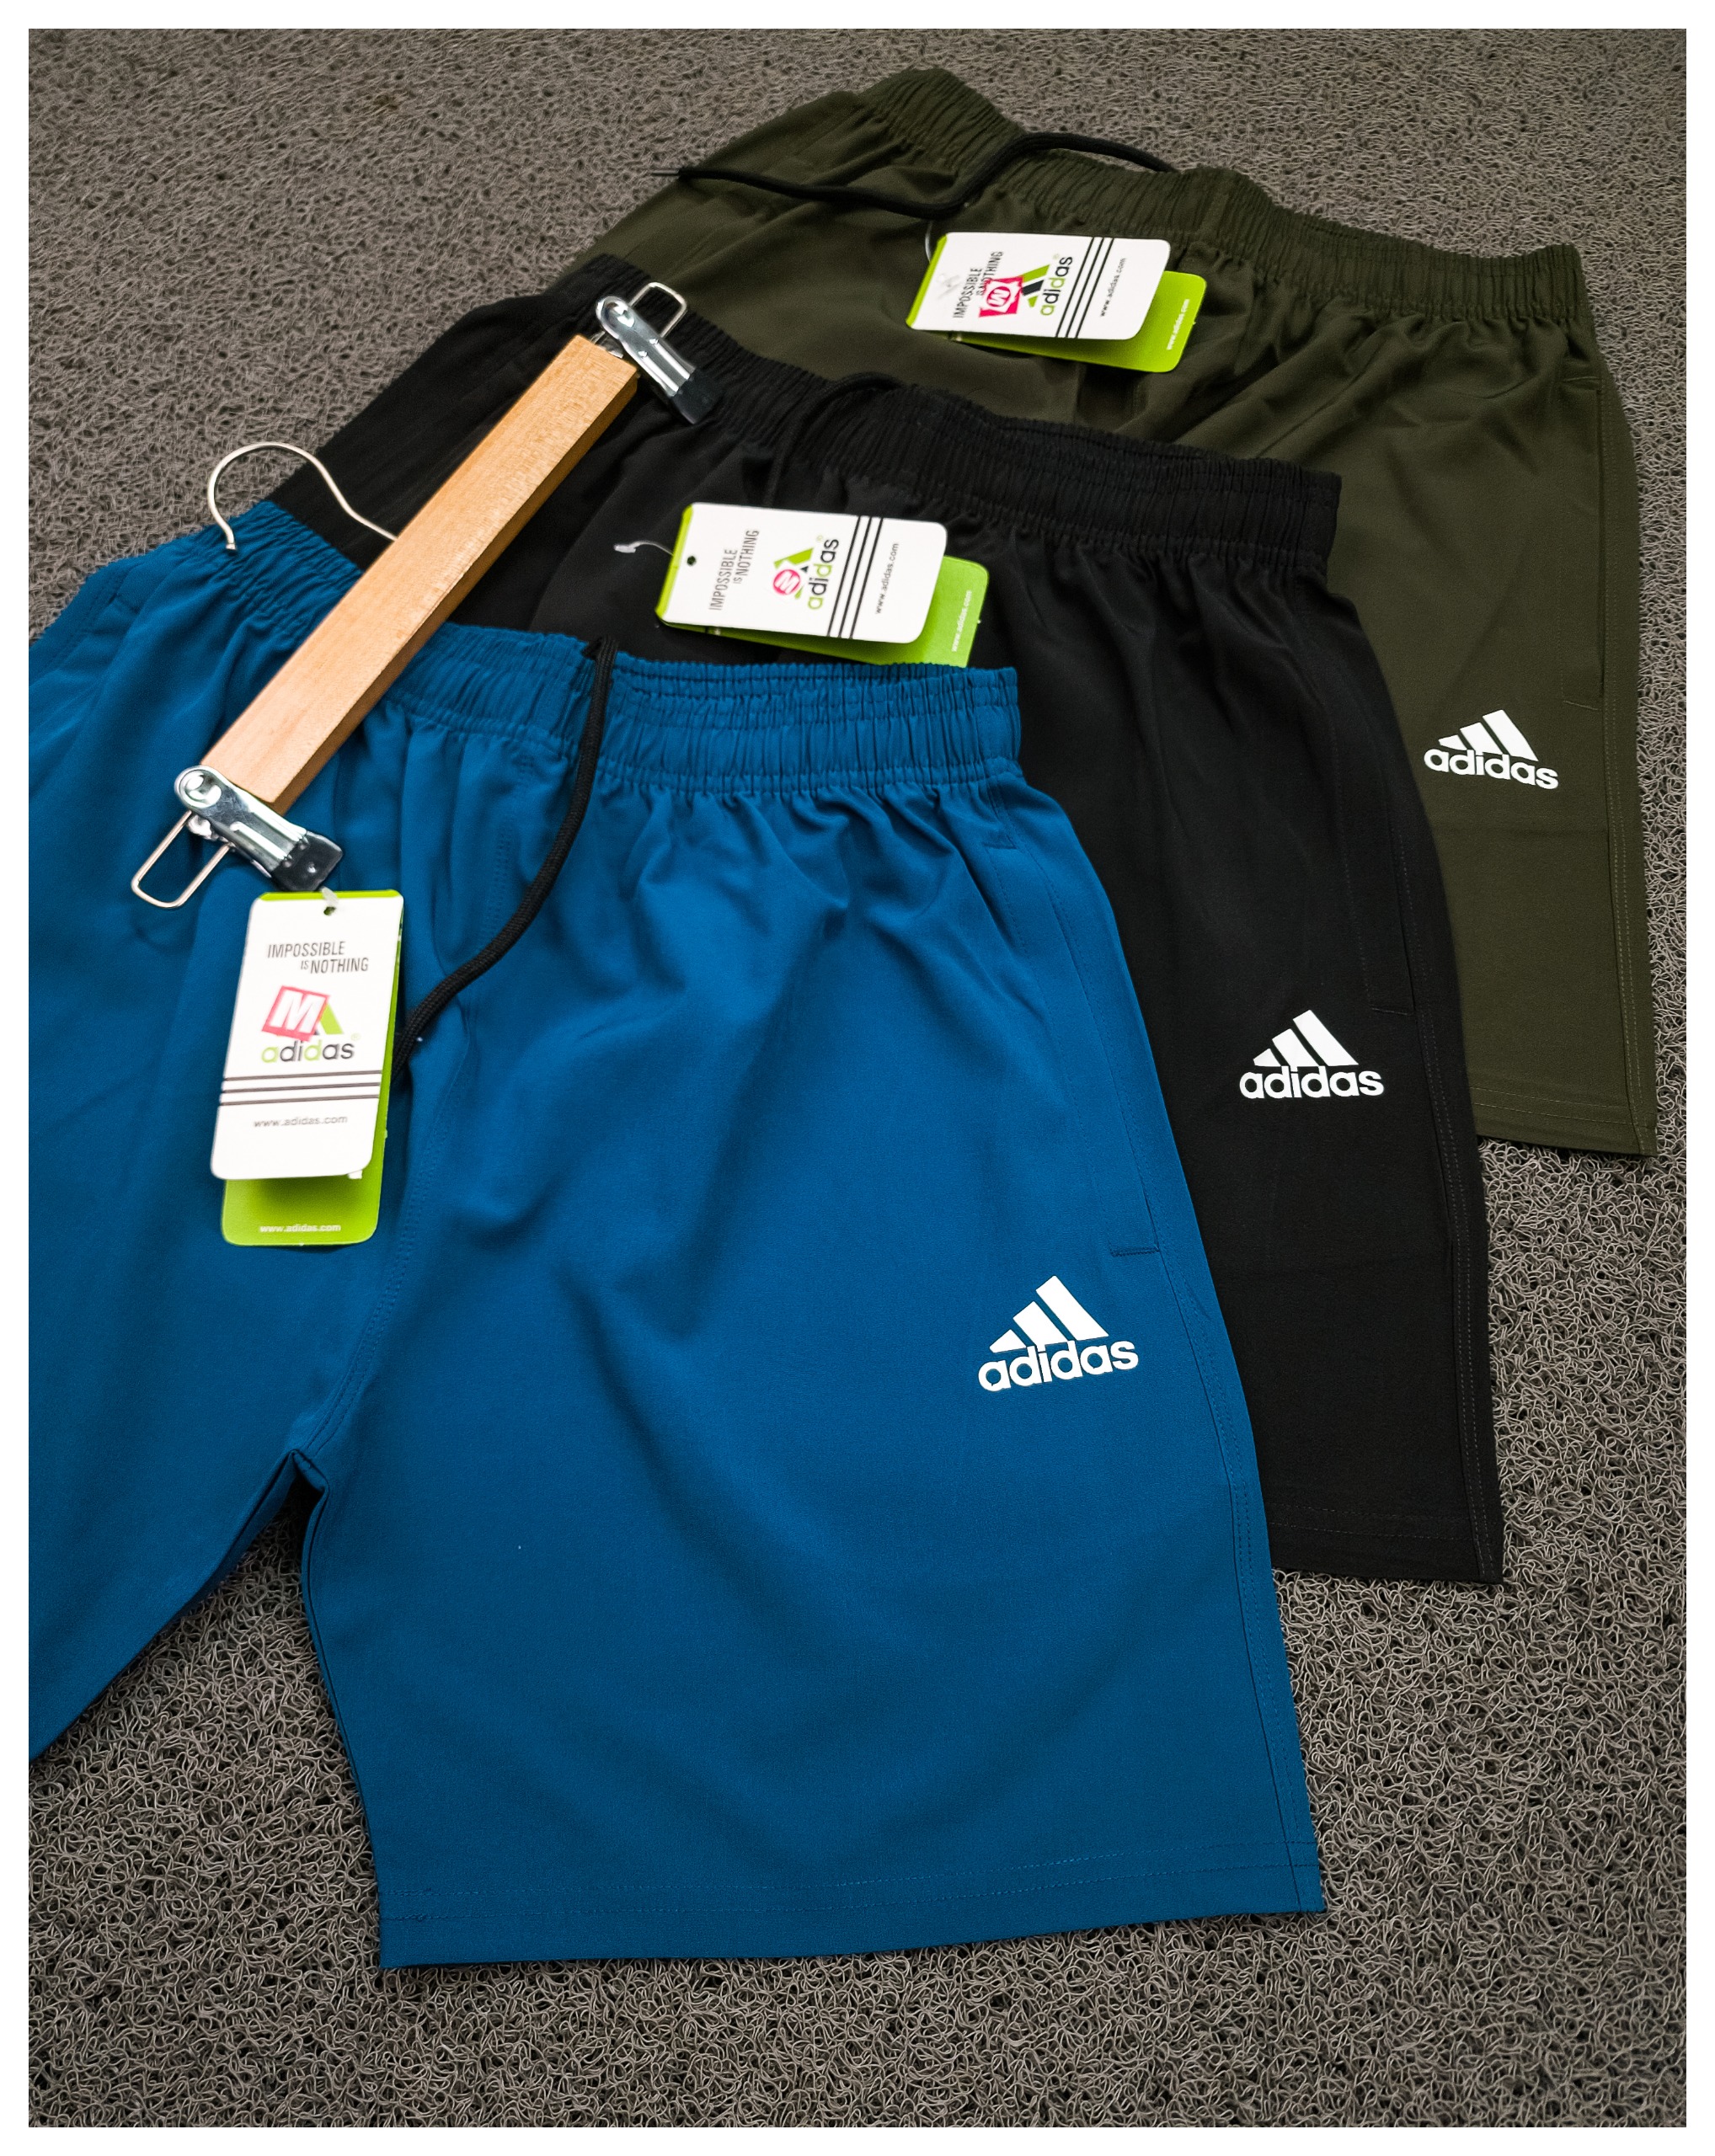 AD7501-Set Of 4 Pcs@170/Pc- Sports NS Lycra Fabric Shorts-AD7501-AN13-S01-LGY - M-1, L-1, XL-1, XXL-1, Light Grey